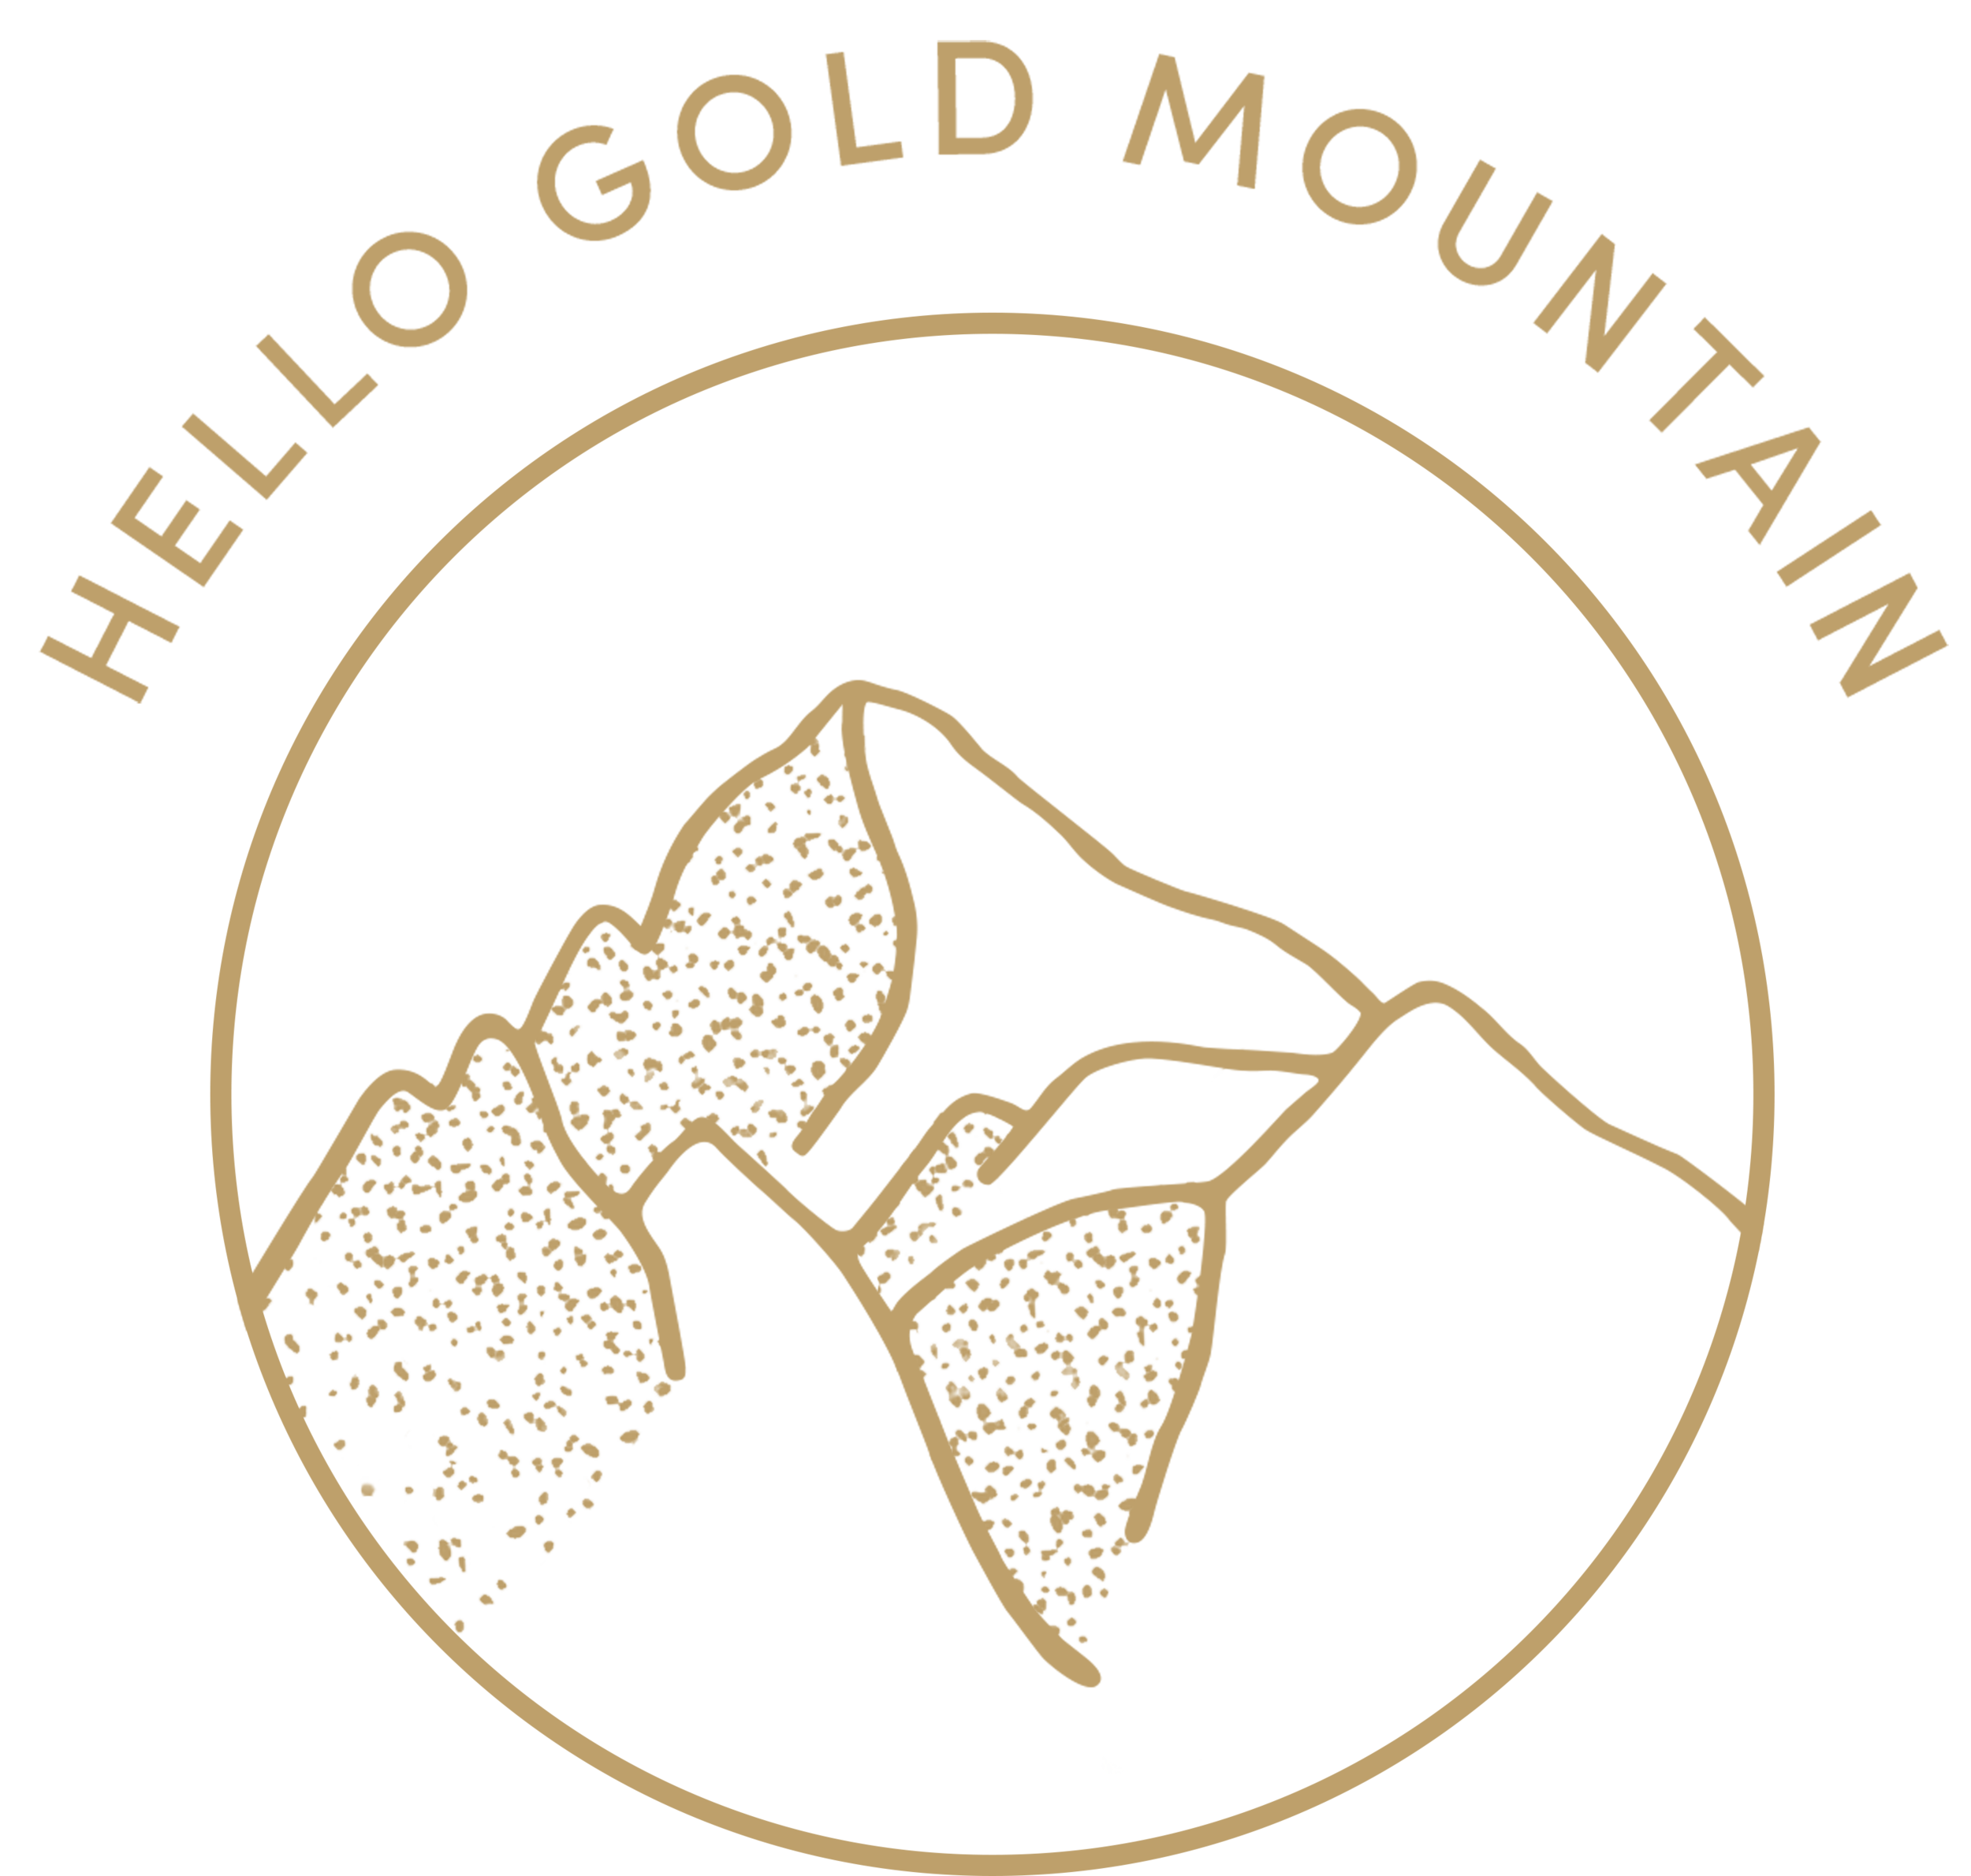 Hello Gold Mountain